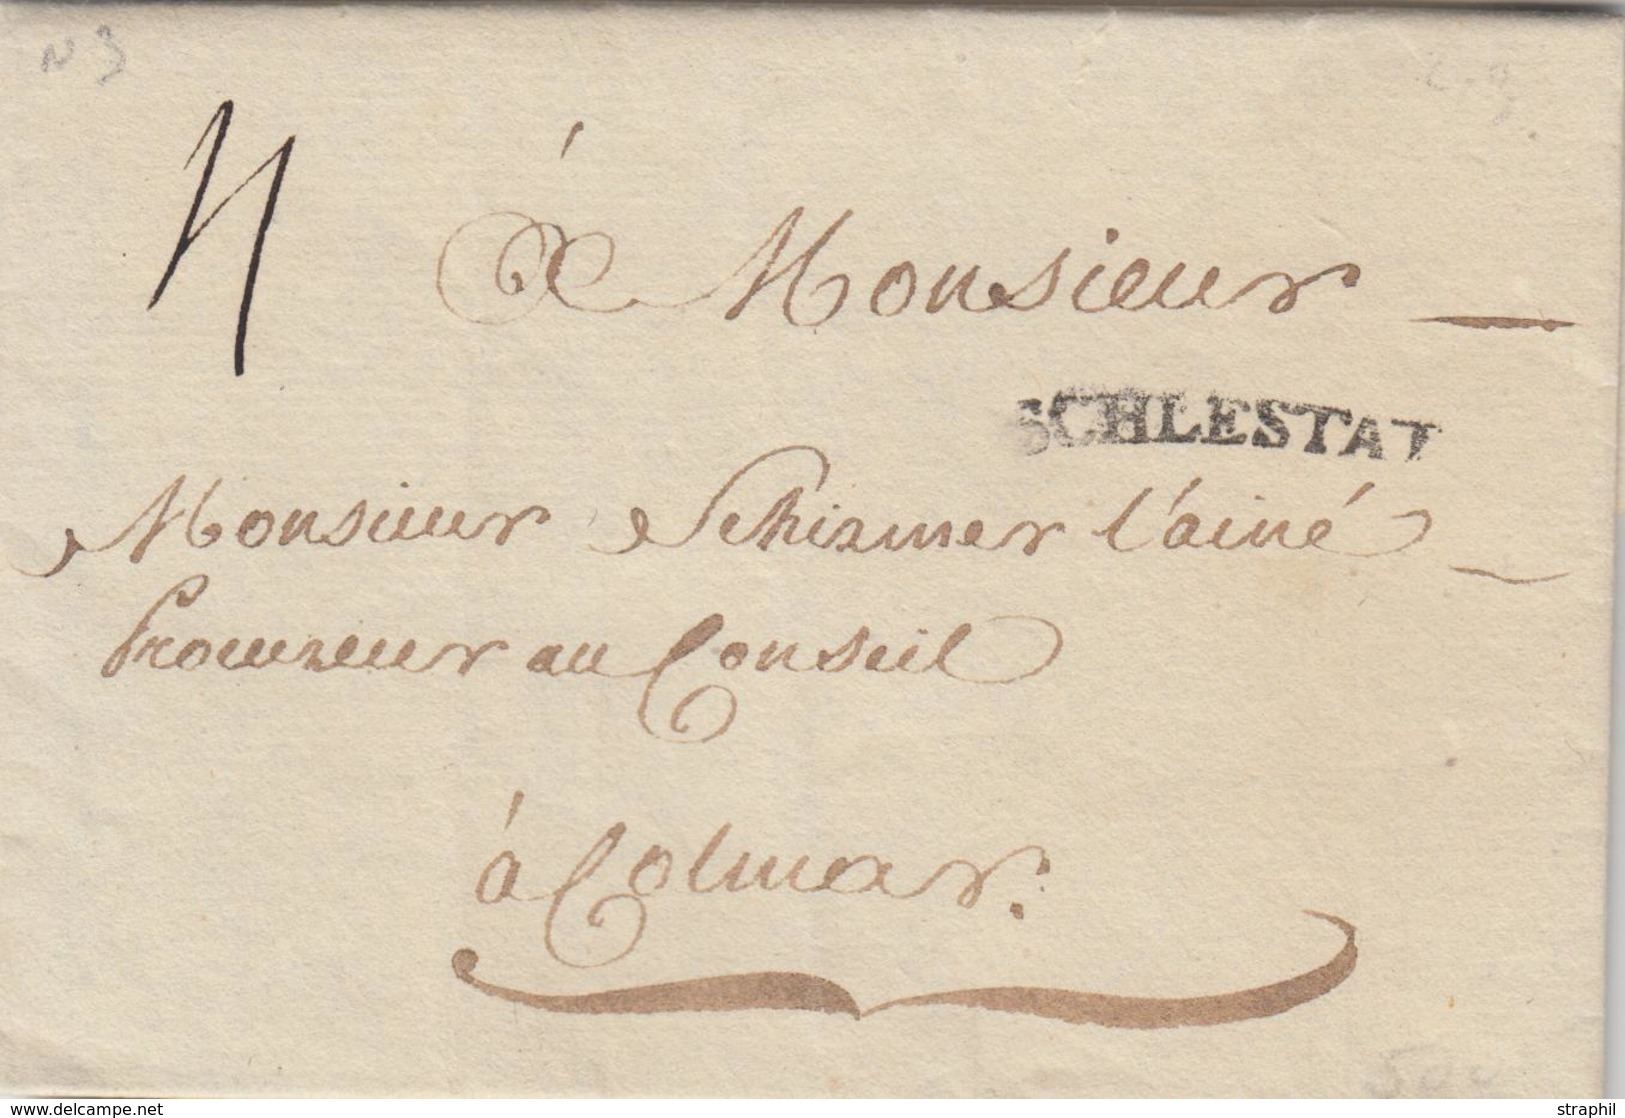 LAC SCHLESTAT  - Len N°3 - 1790 - Pr Colmar - Au Verso Joli Sceau Royal - TB - Briefe U. Dokumente